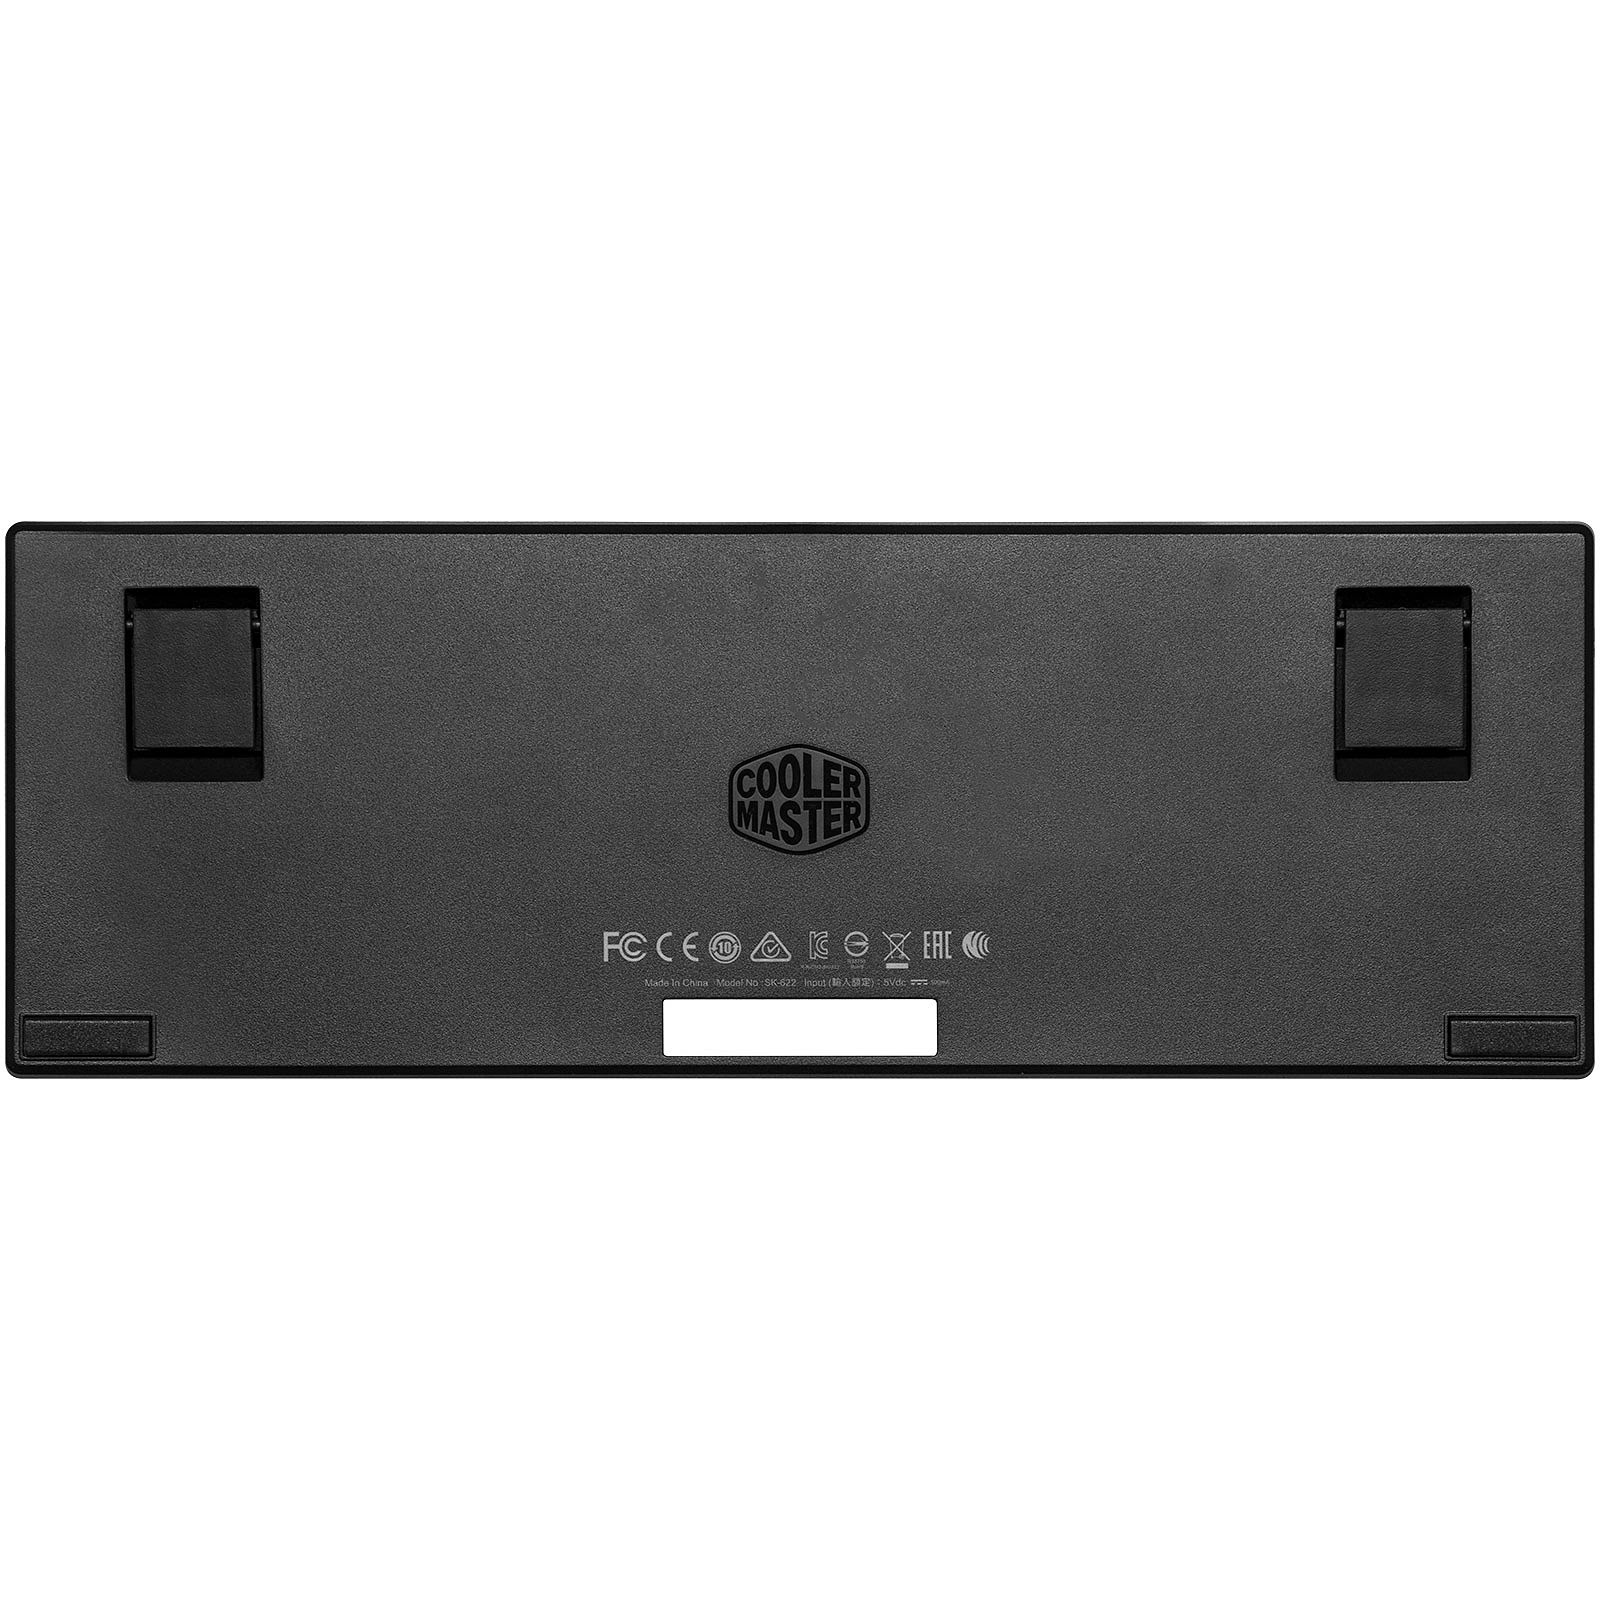 Cooler Master SK622 Noir (Switch rouge) - Clavier PC - 4